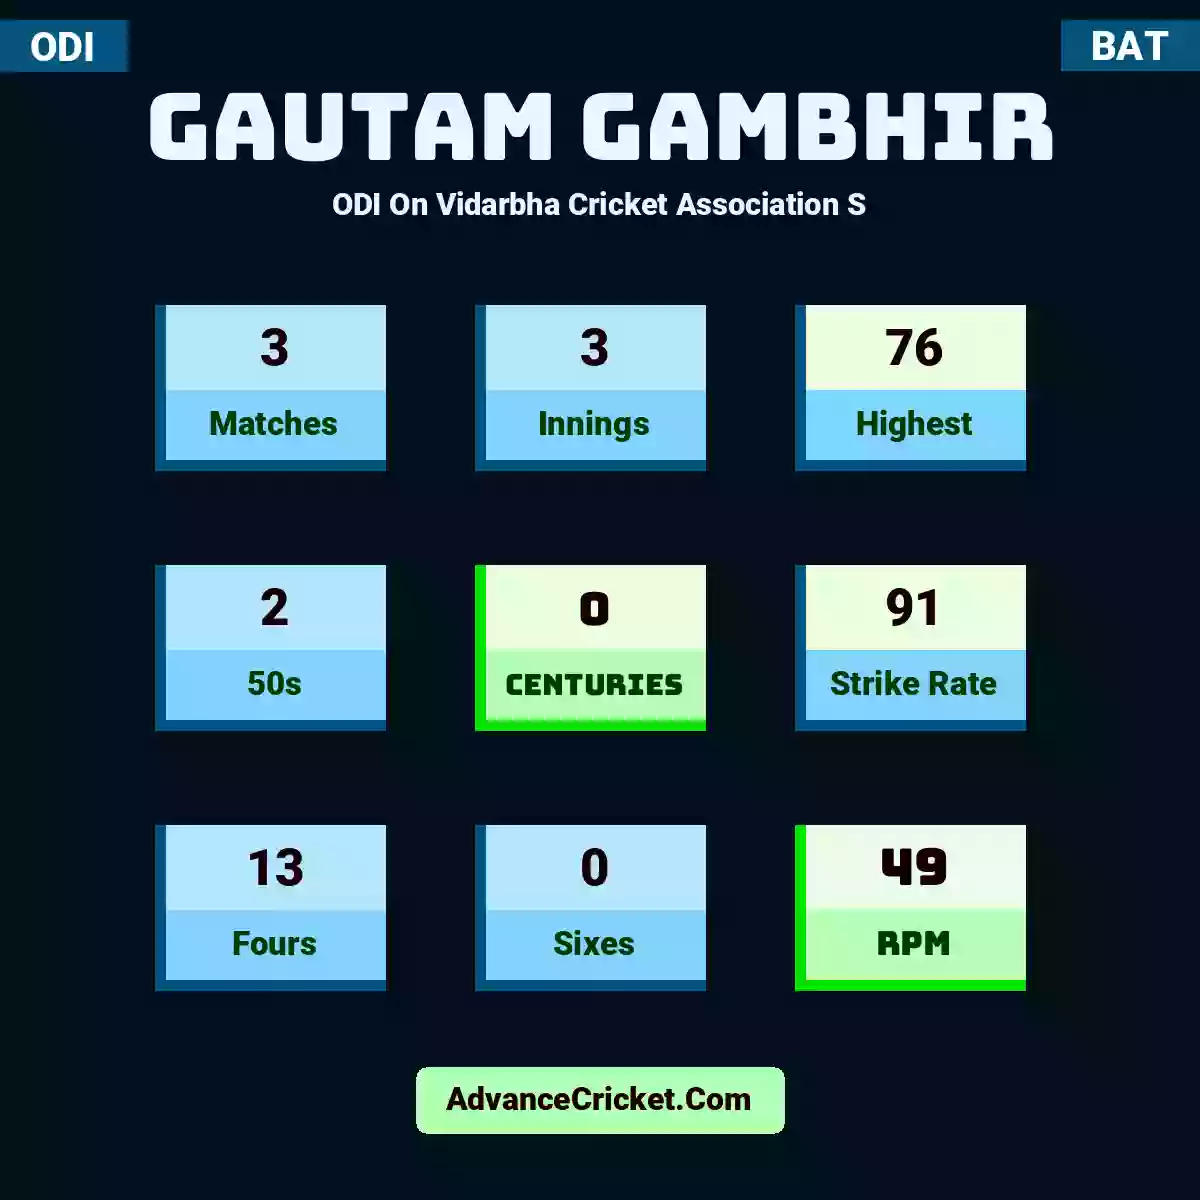 Gautam Gambhir ODI  On Vidarbha Cricket Association S, Gautam Gambhir played 3 matches, scored 76 runs as highest, 2 half-centuries, and 0 centuries, with a strike rate of 91. G.Gambhir hit 13 fours and 0 sixes, with an RPM of 49.